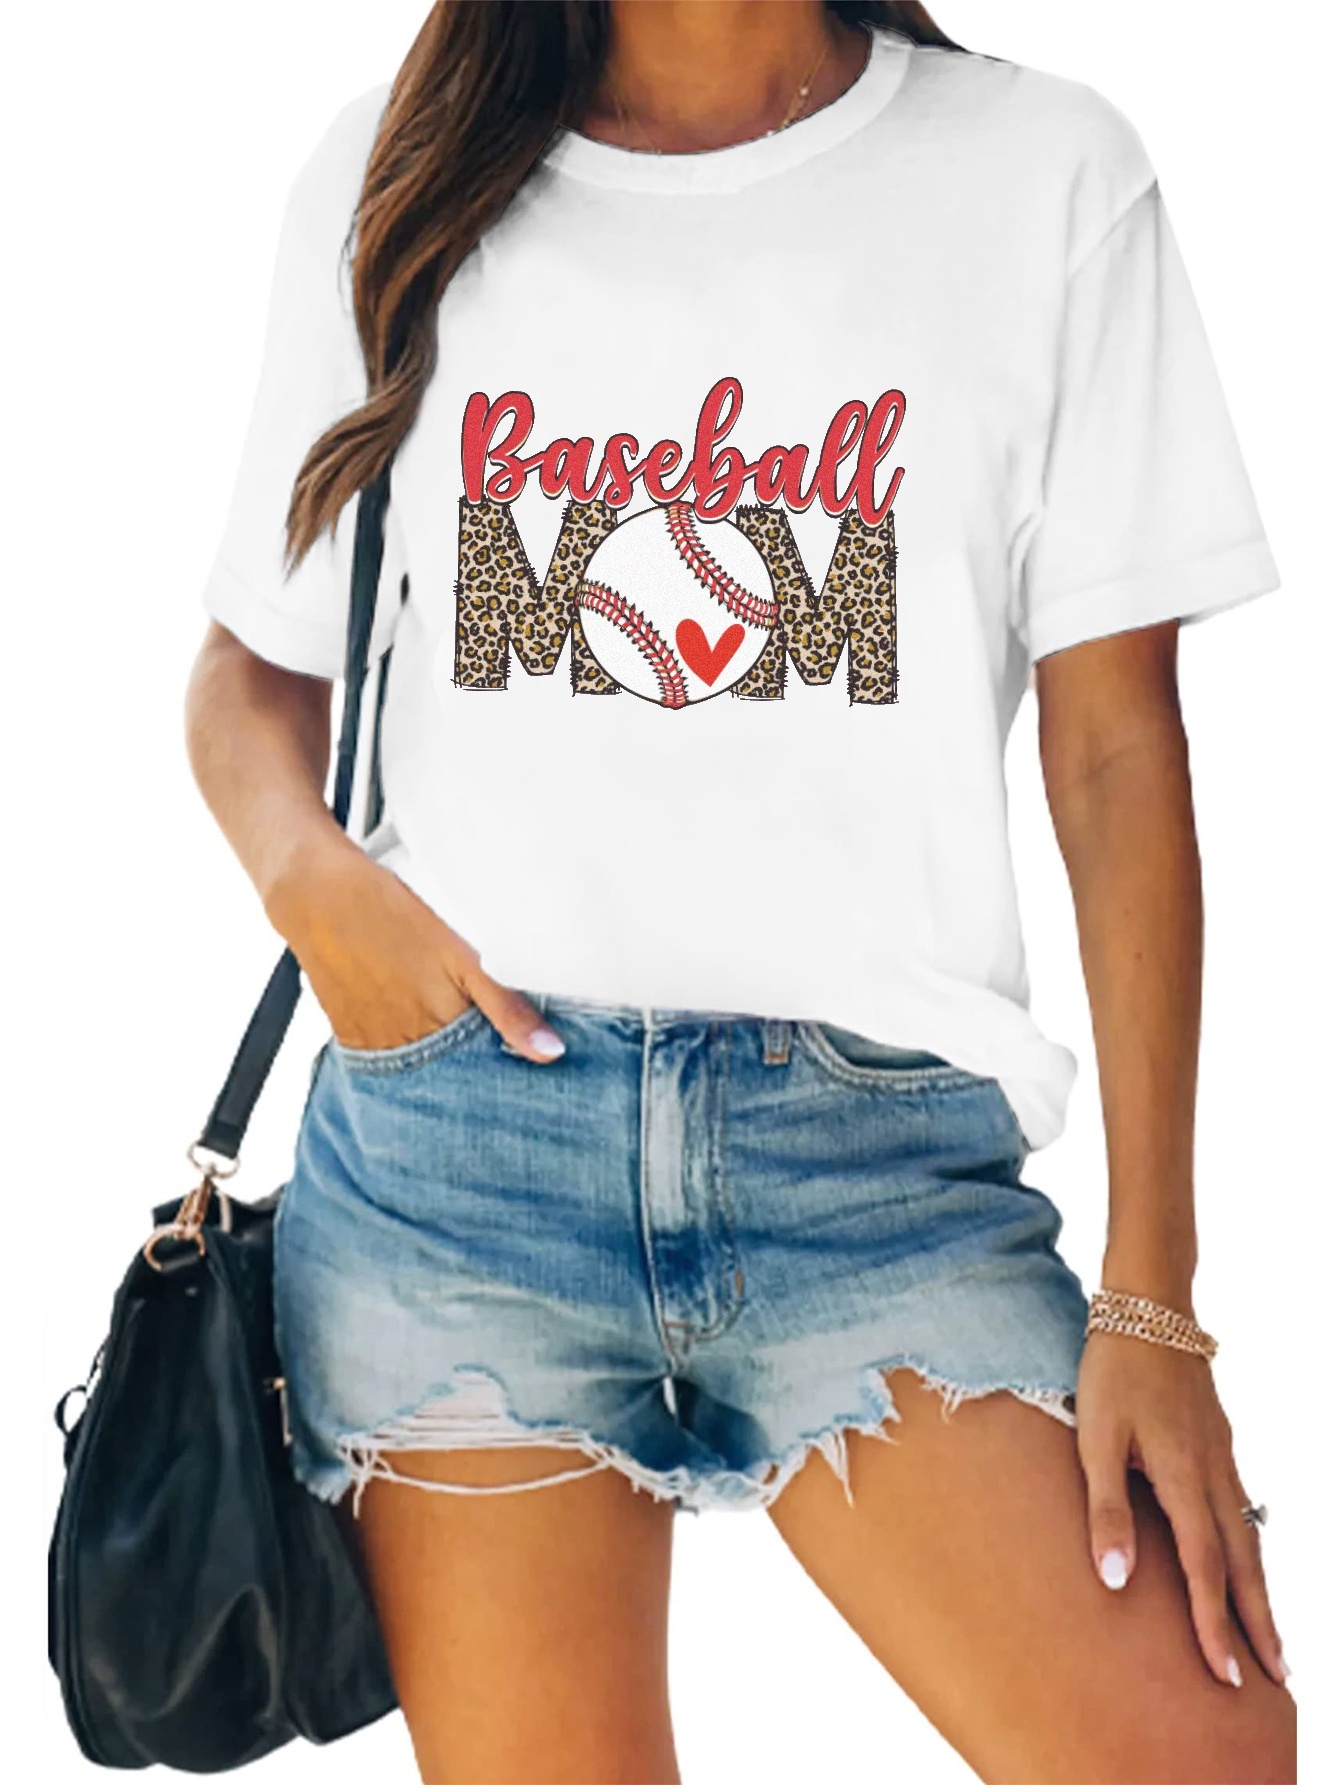 Lastesso Women Cute Baseball Print Shirts Short Sleeve Colorblock